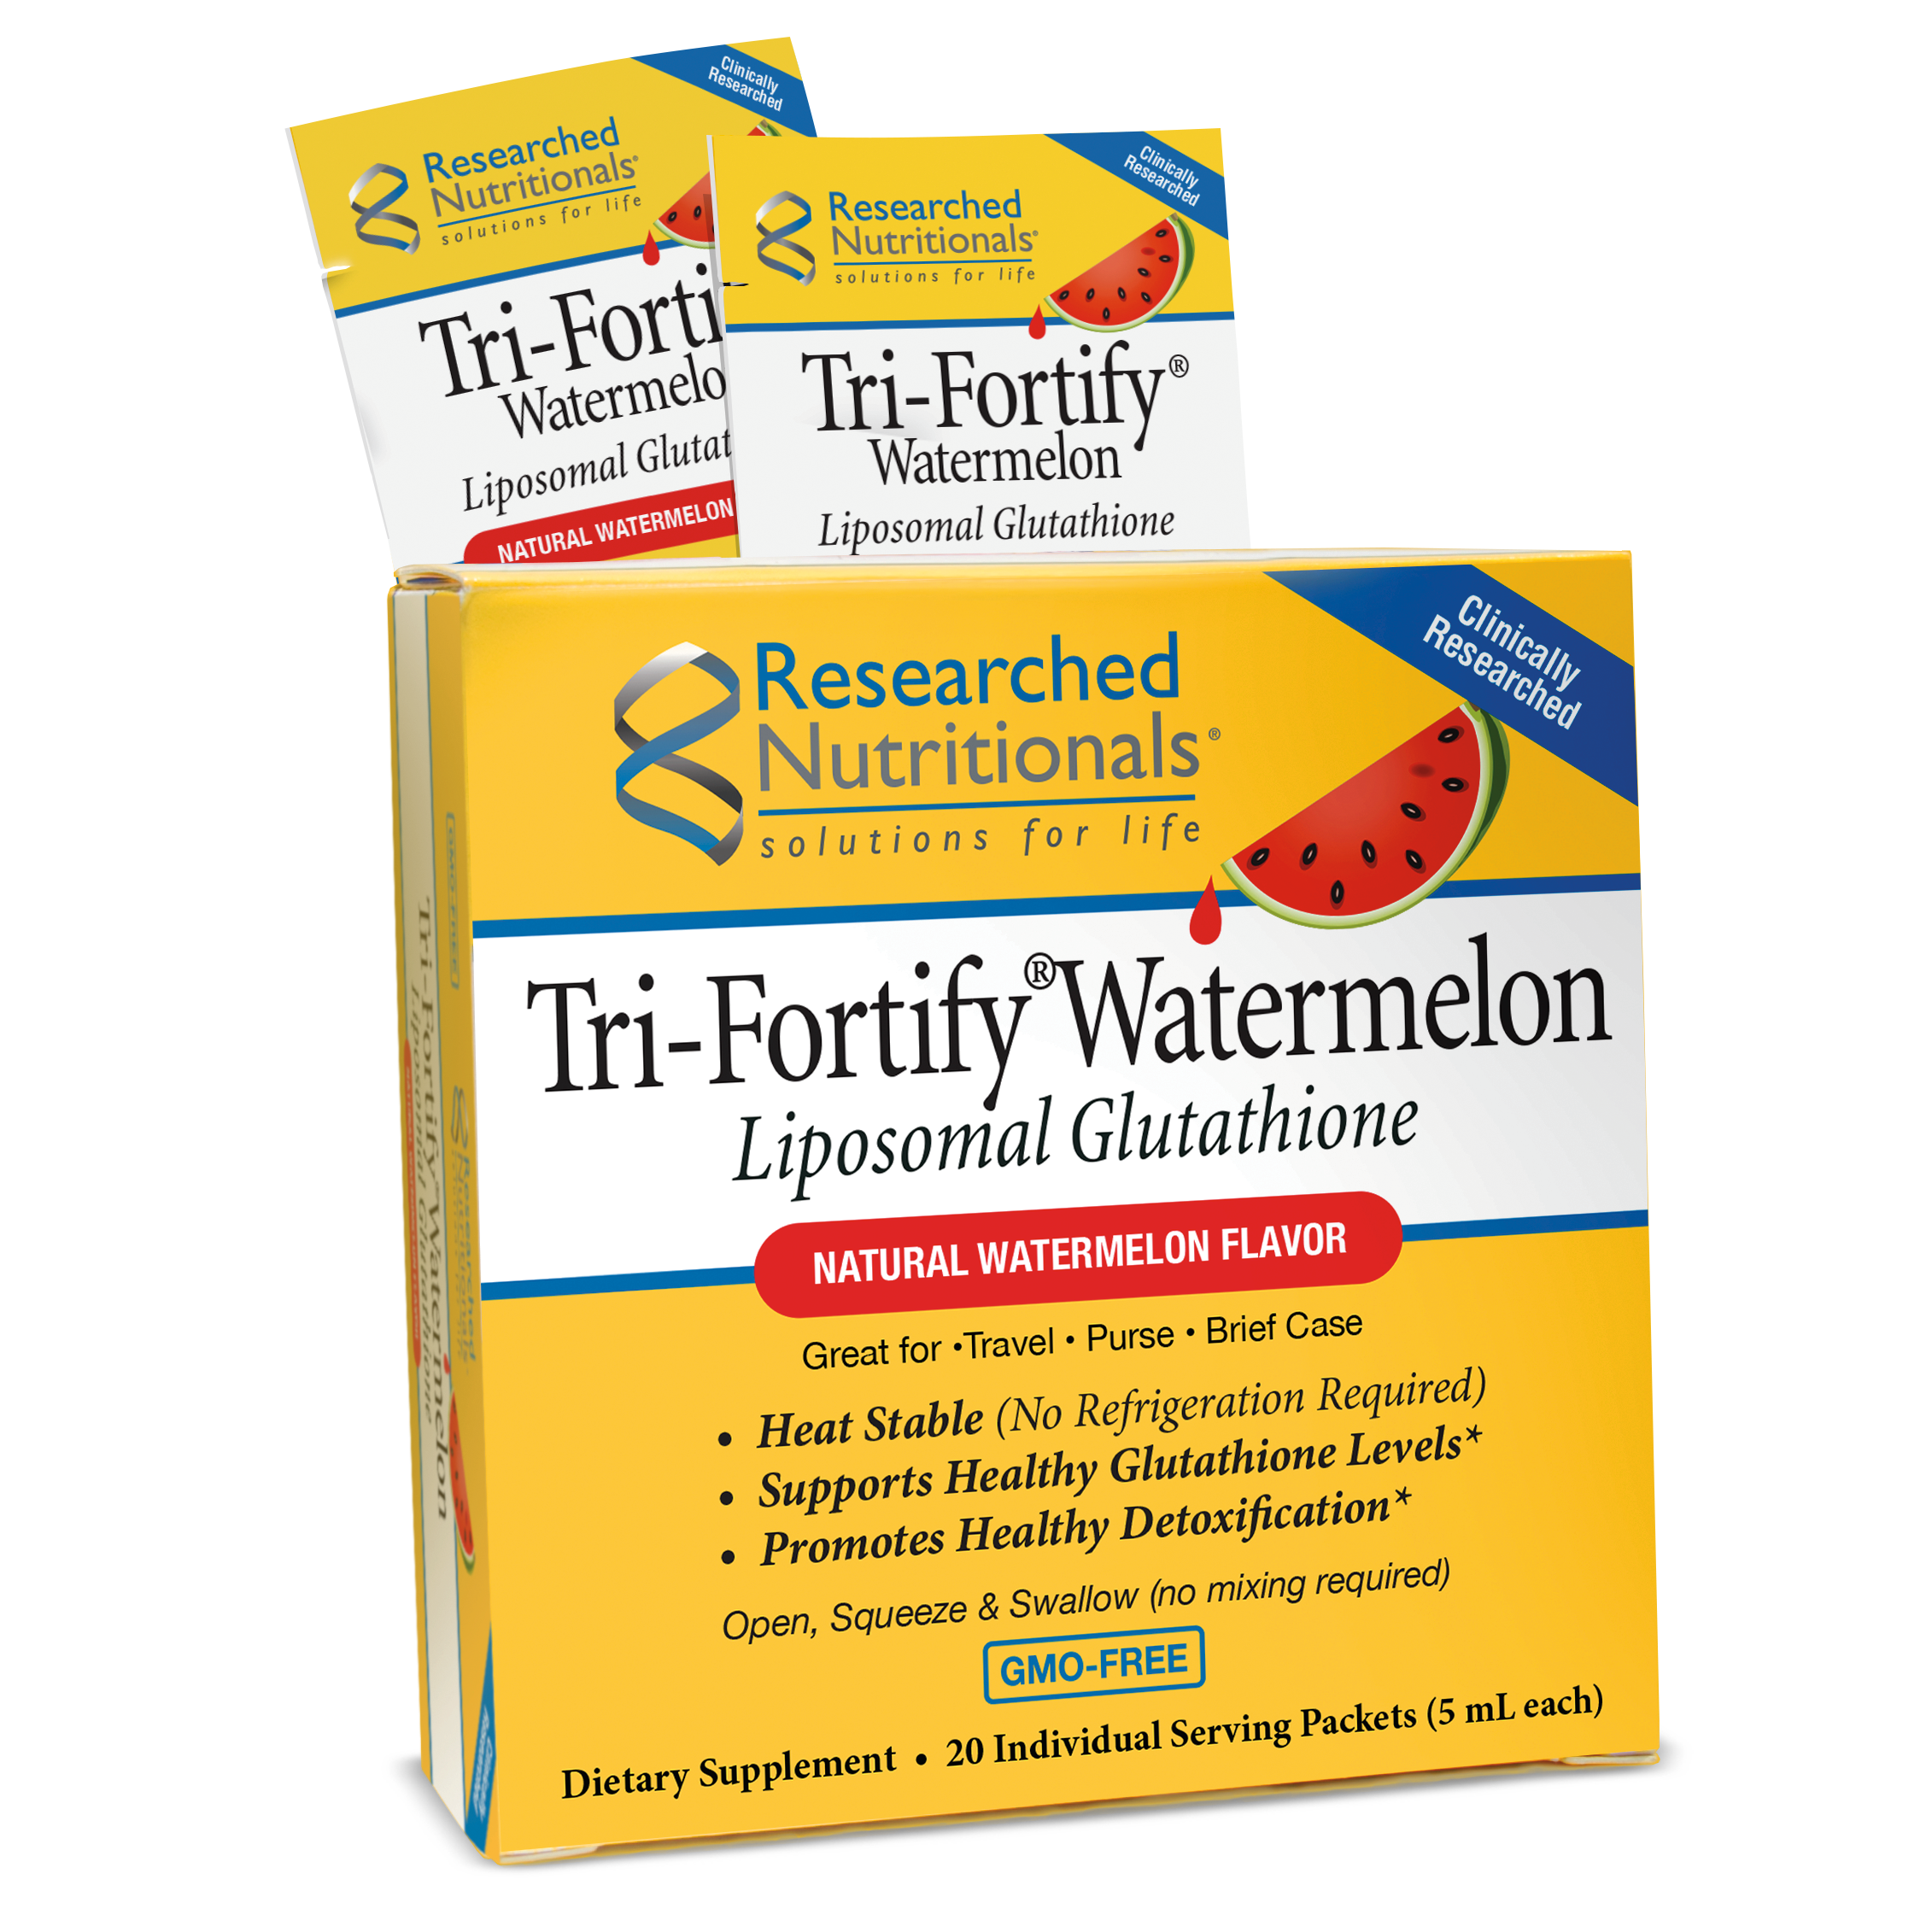 Tri-Fortify Watermelon (Liposomal Glutathione & Vitamin C) - 20 Pack Box | Researched Nutritionals